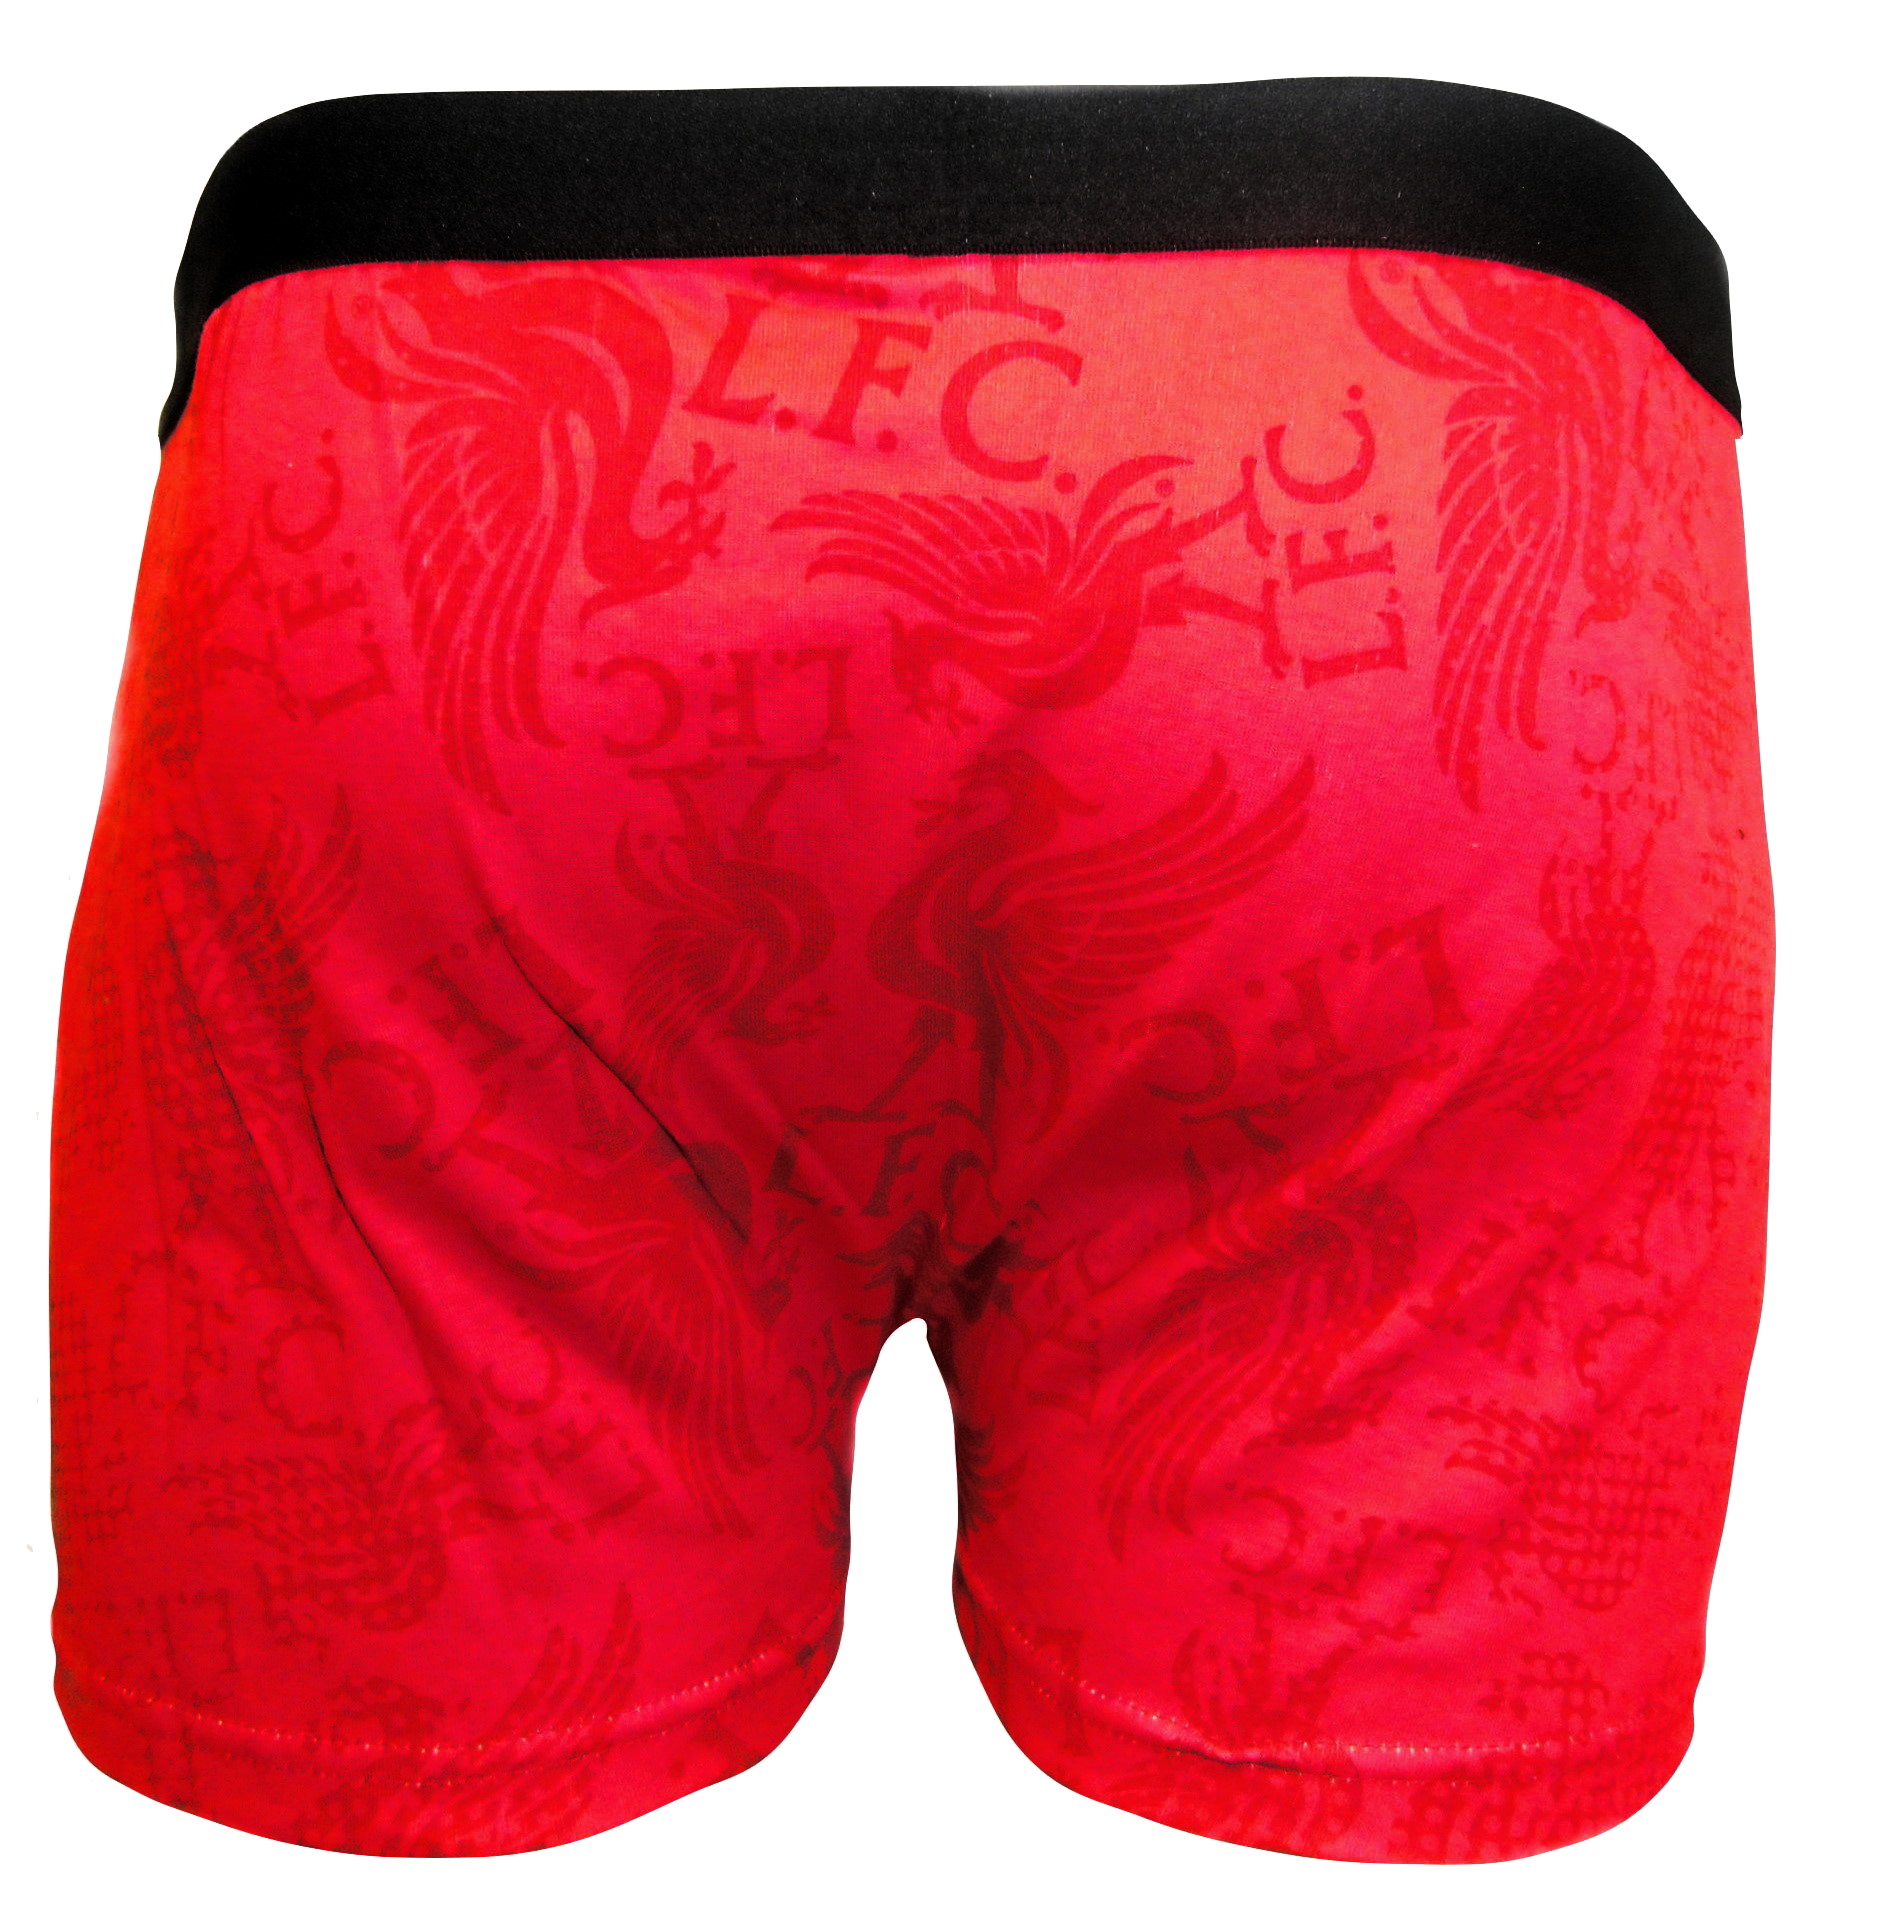 Liverpool FC Men's Boxer Shorts (2).JPG  by Thingimijigs